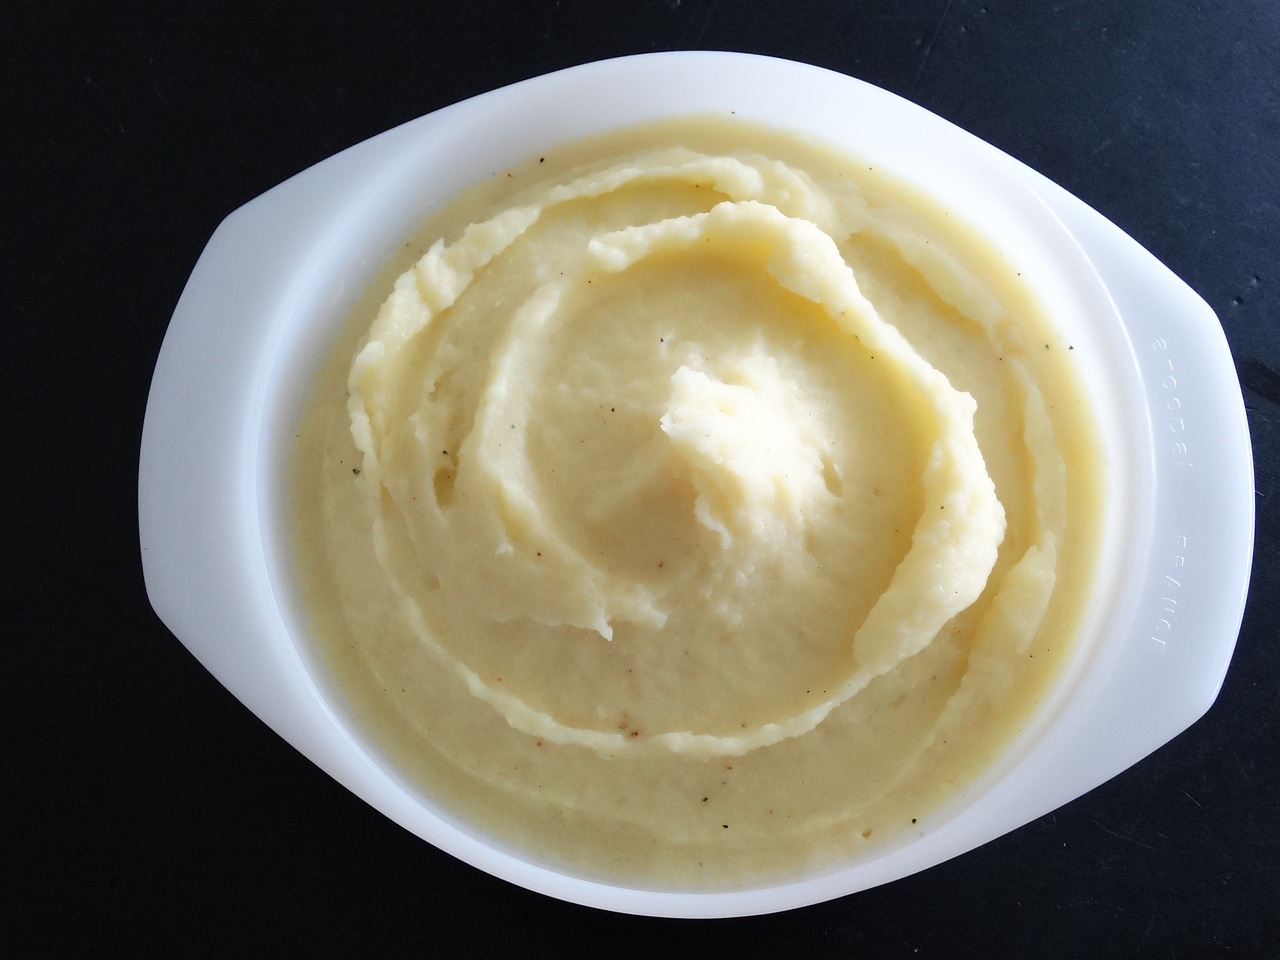 how to make mashed potatoes